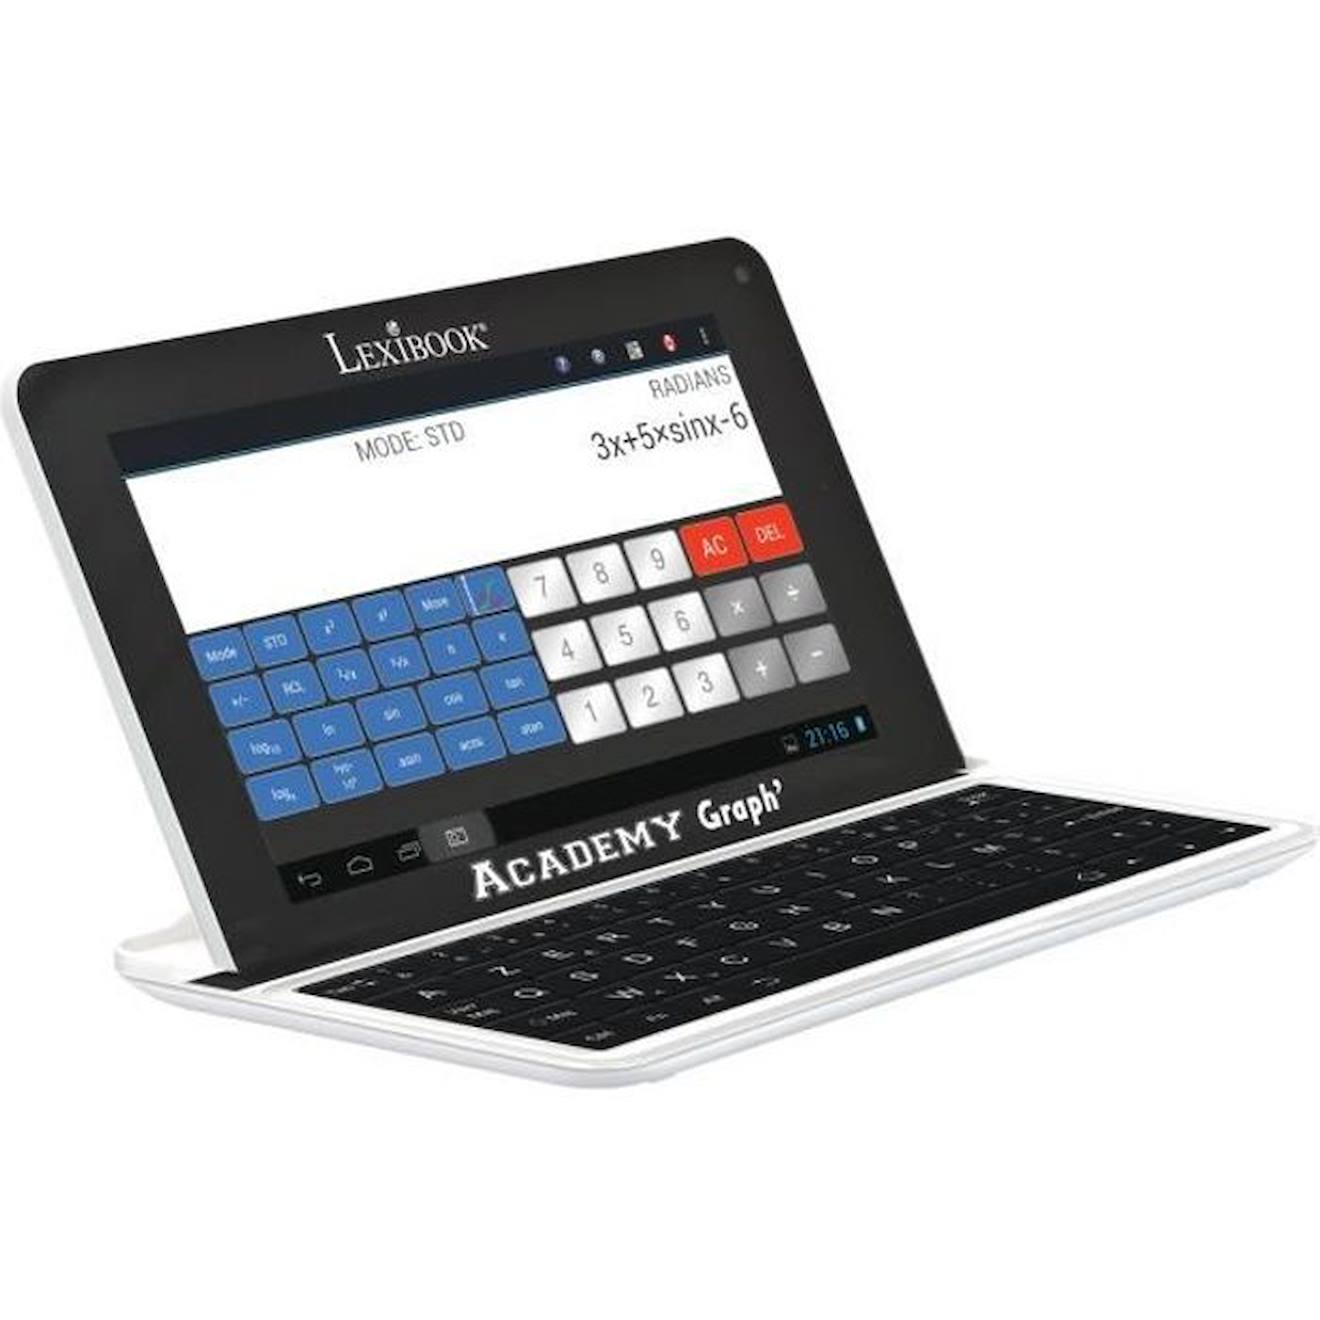 Calculatrice Android Avec Clavier Lexibook Academy 7 - Mfgc177fr - Mixte - Wi-fi Noir